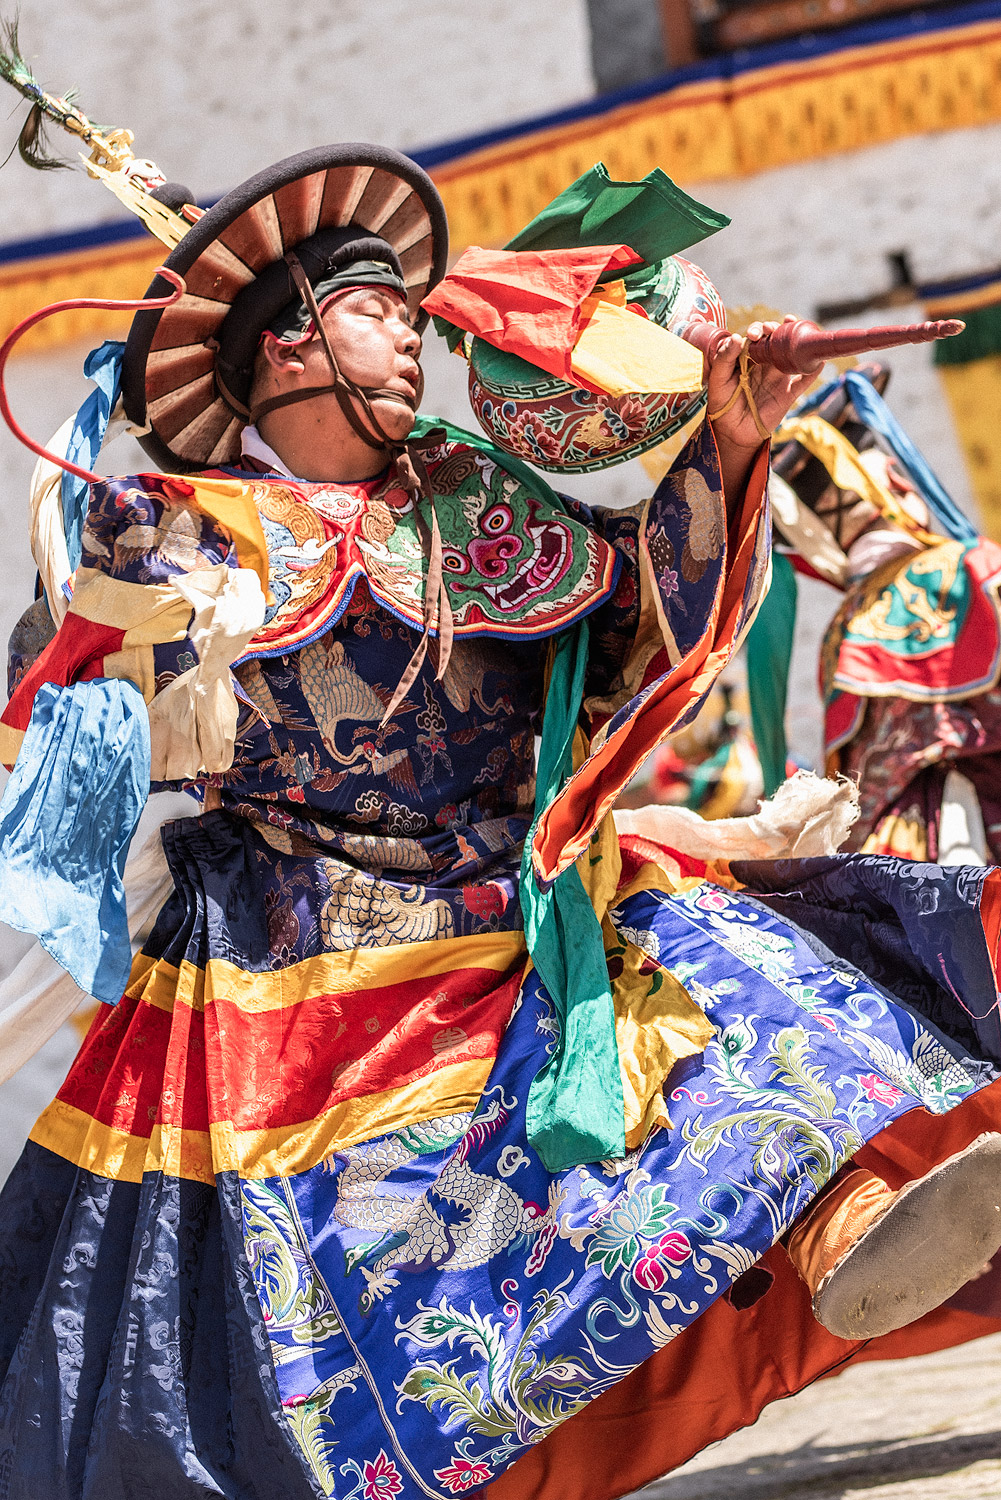 Festivals of Bhutan, Paro Tshechu, Paro, Bhutan by Nils Leonhardt